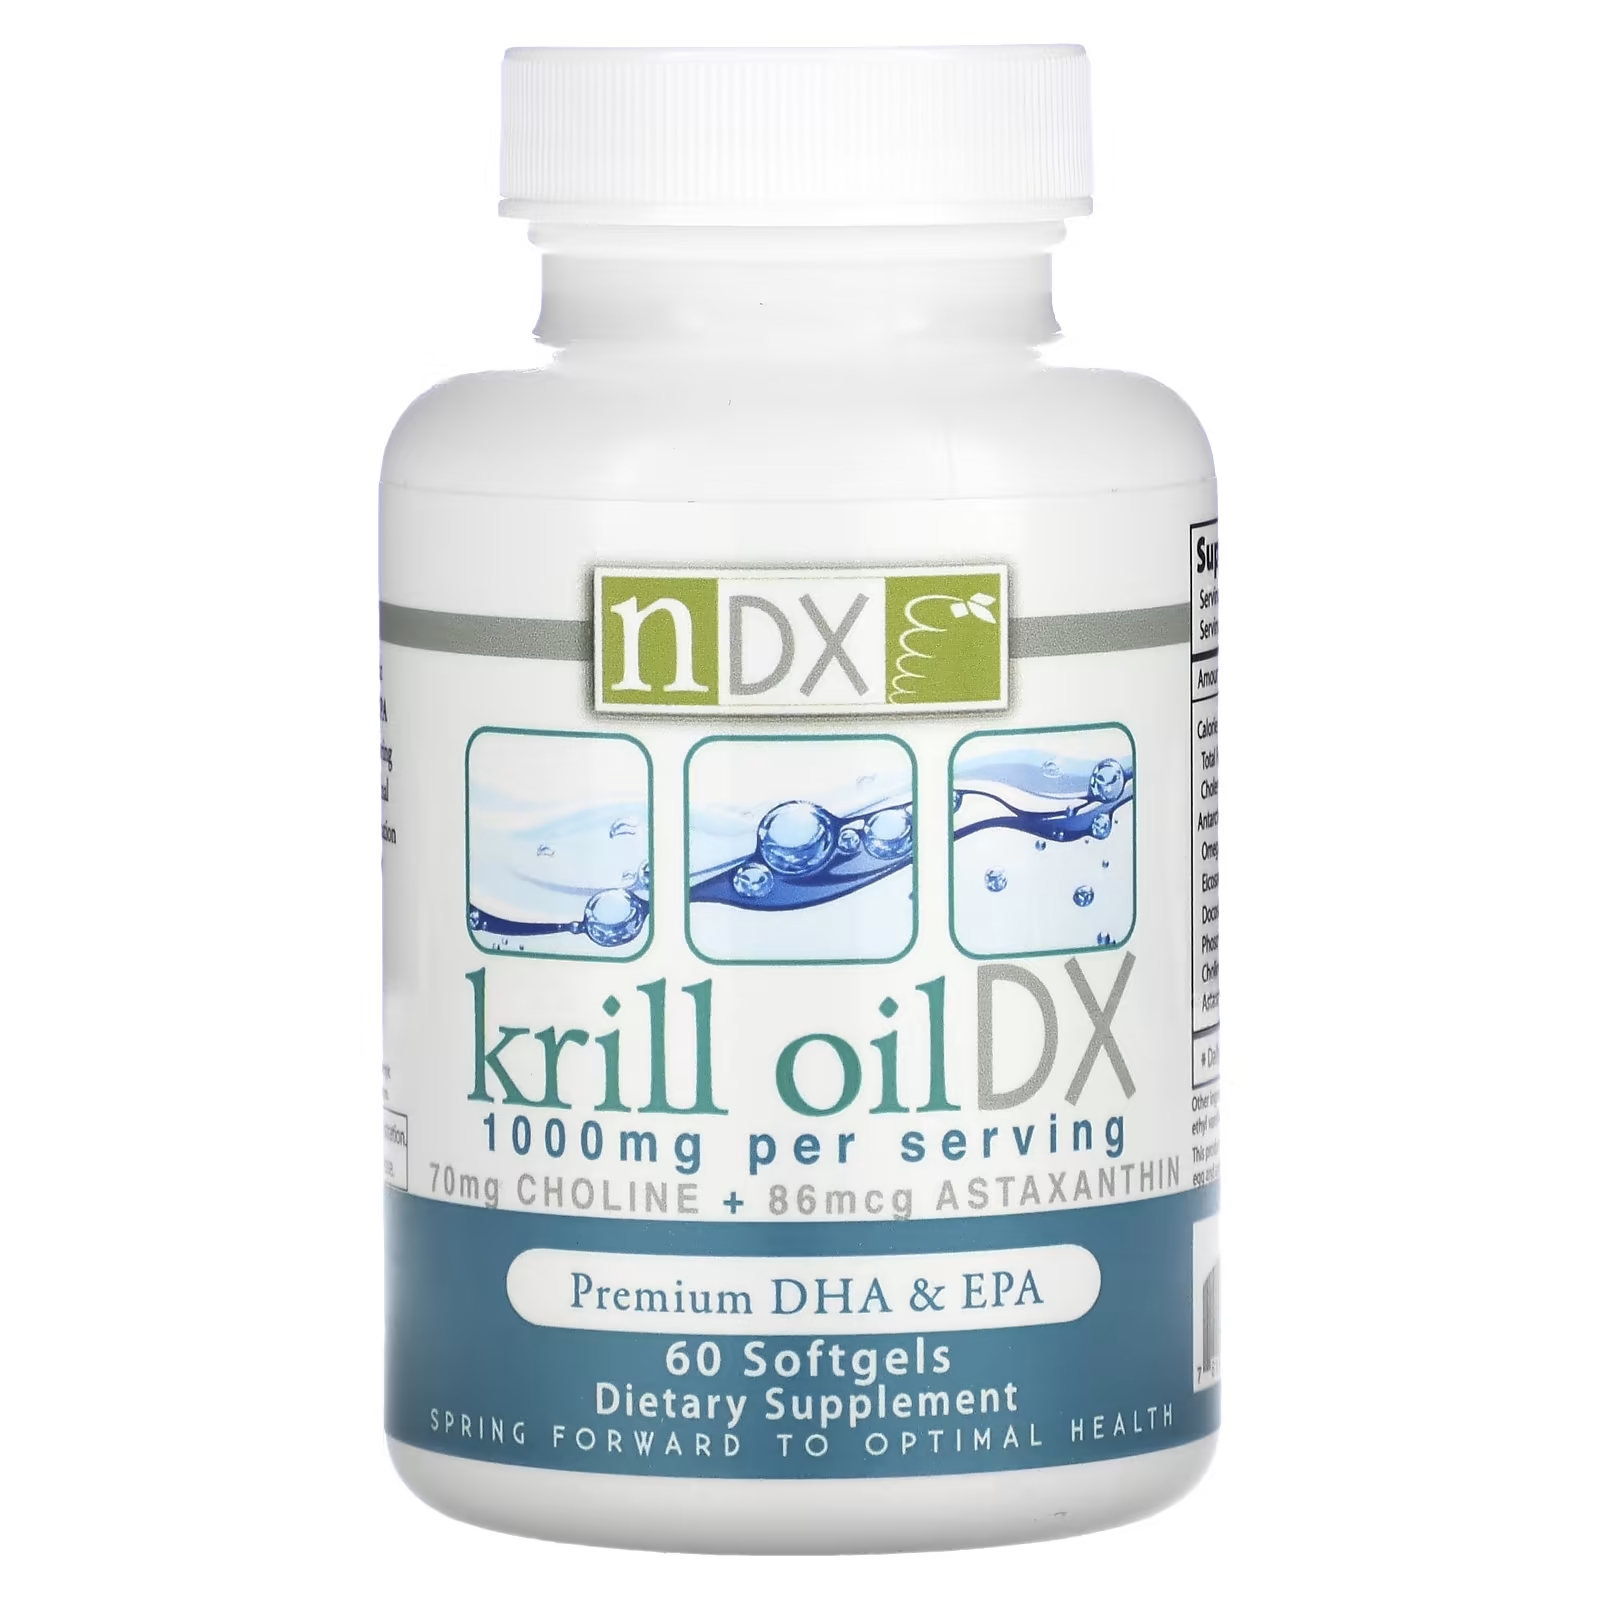 Natural Dynamix NDX Масло криля DX 1000 мг, 60 мягких таблеток пищевая добавка natural dynamix krill oil dx premium dha и epa 1000 мг 60 мягких таблеток